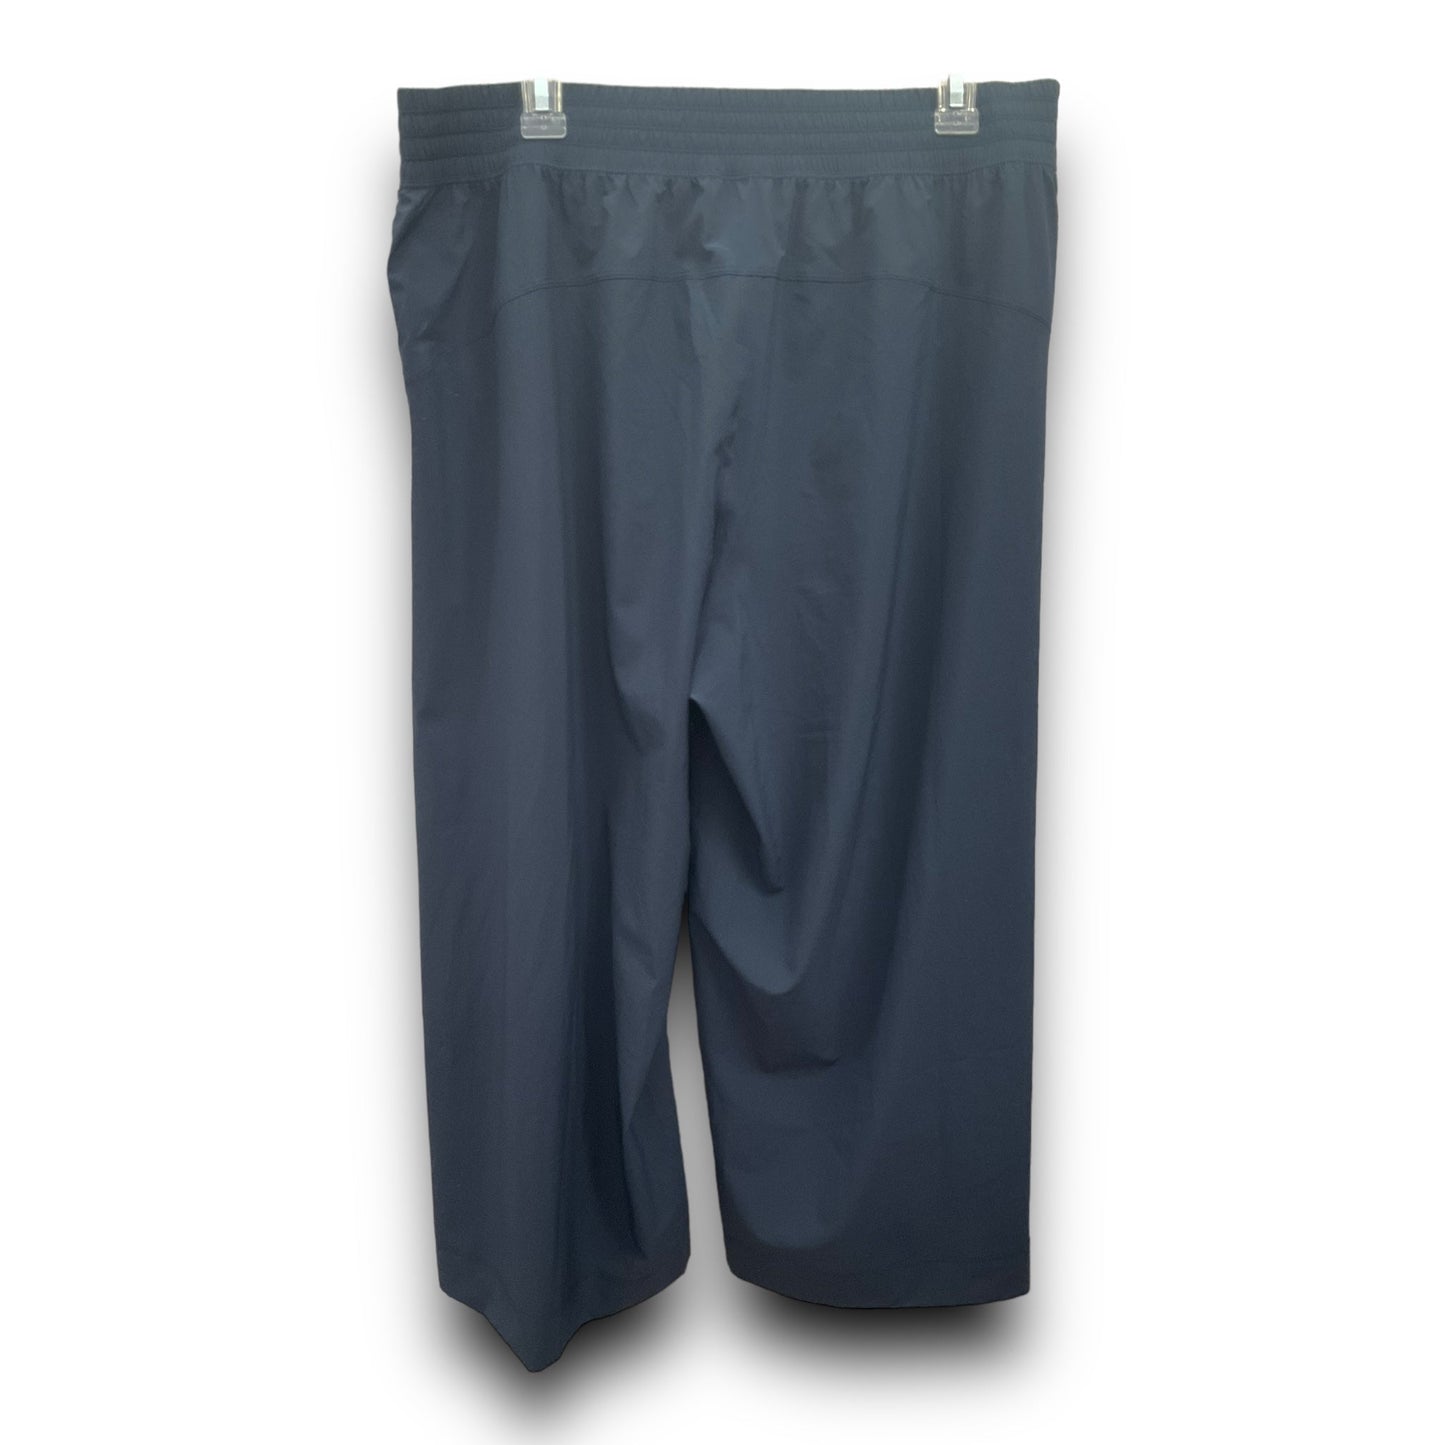 Navy Athletic Pants Lululemon, Size L